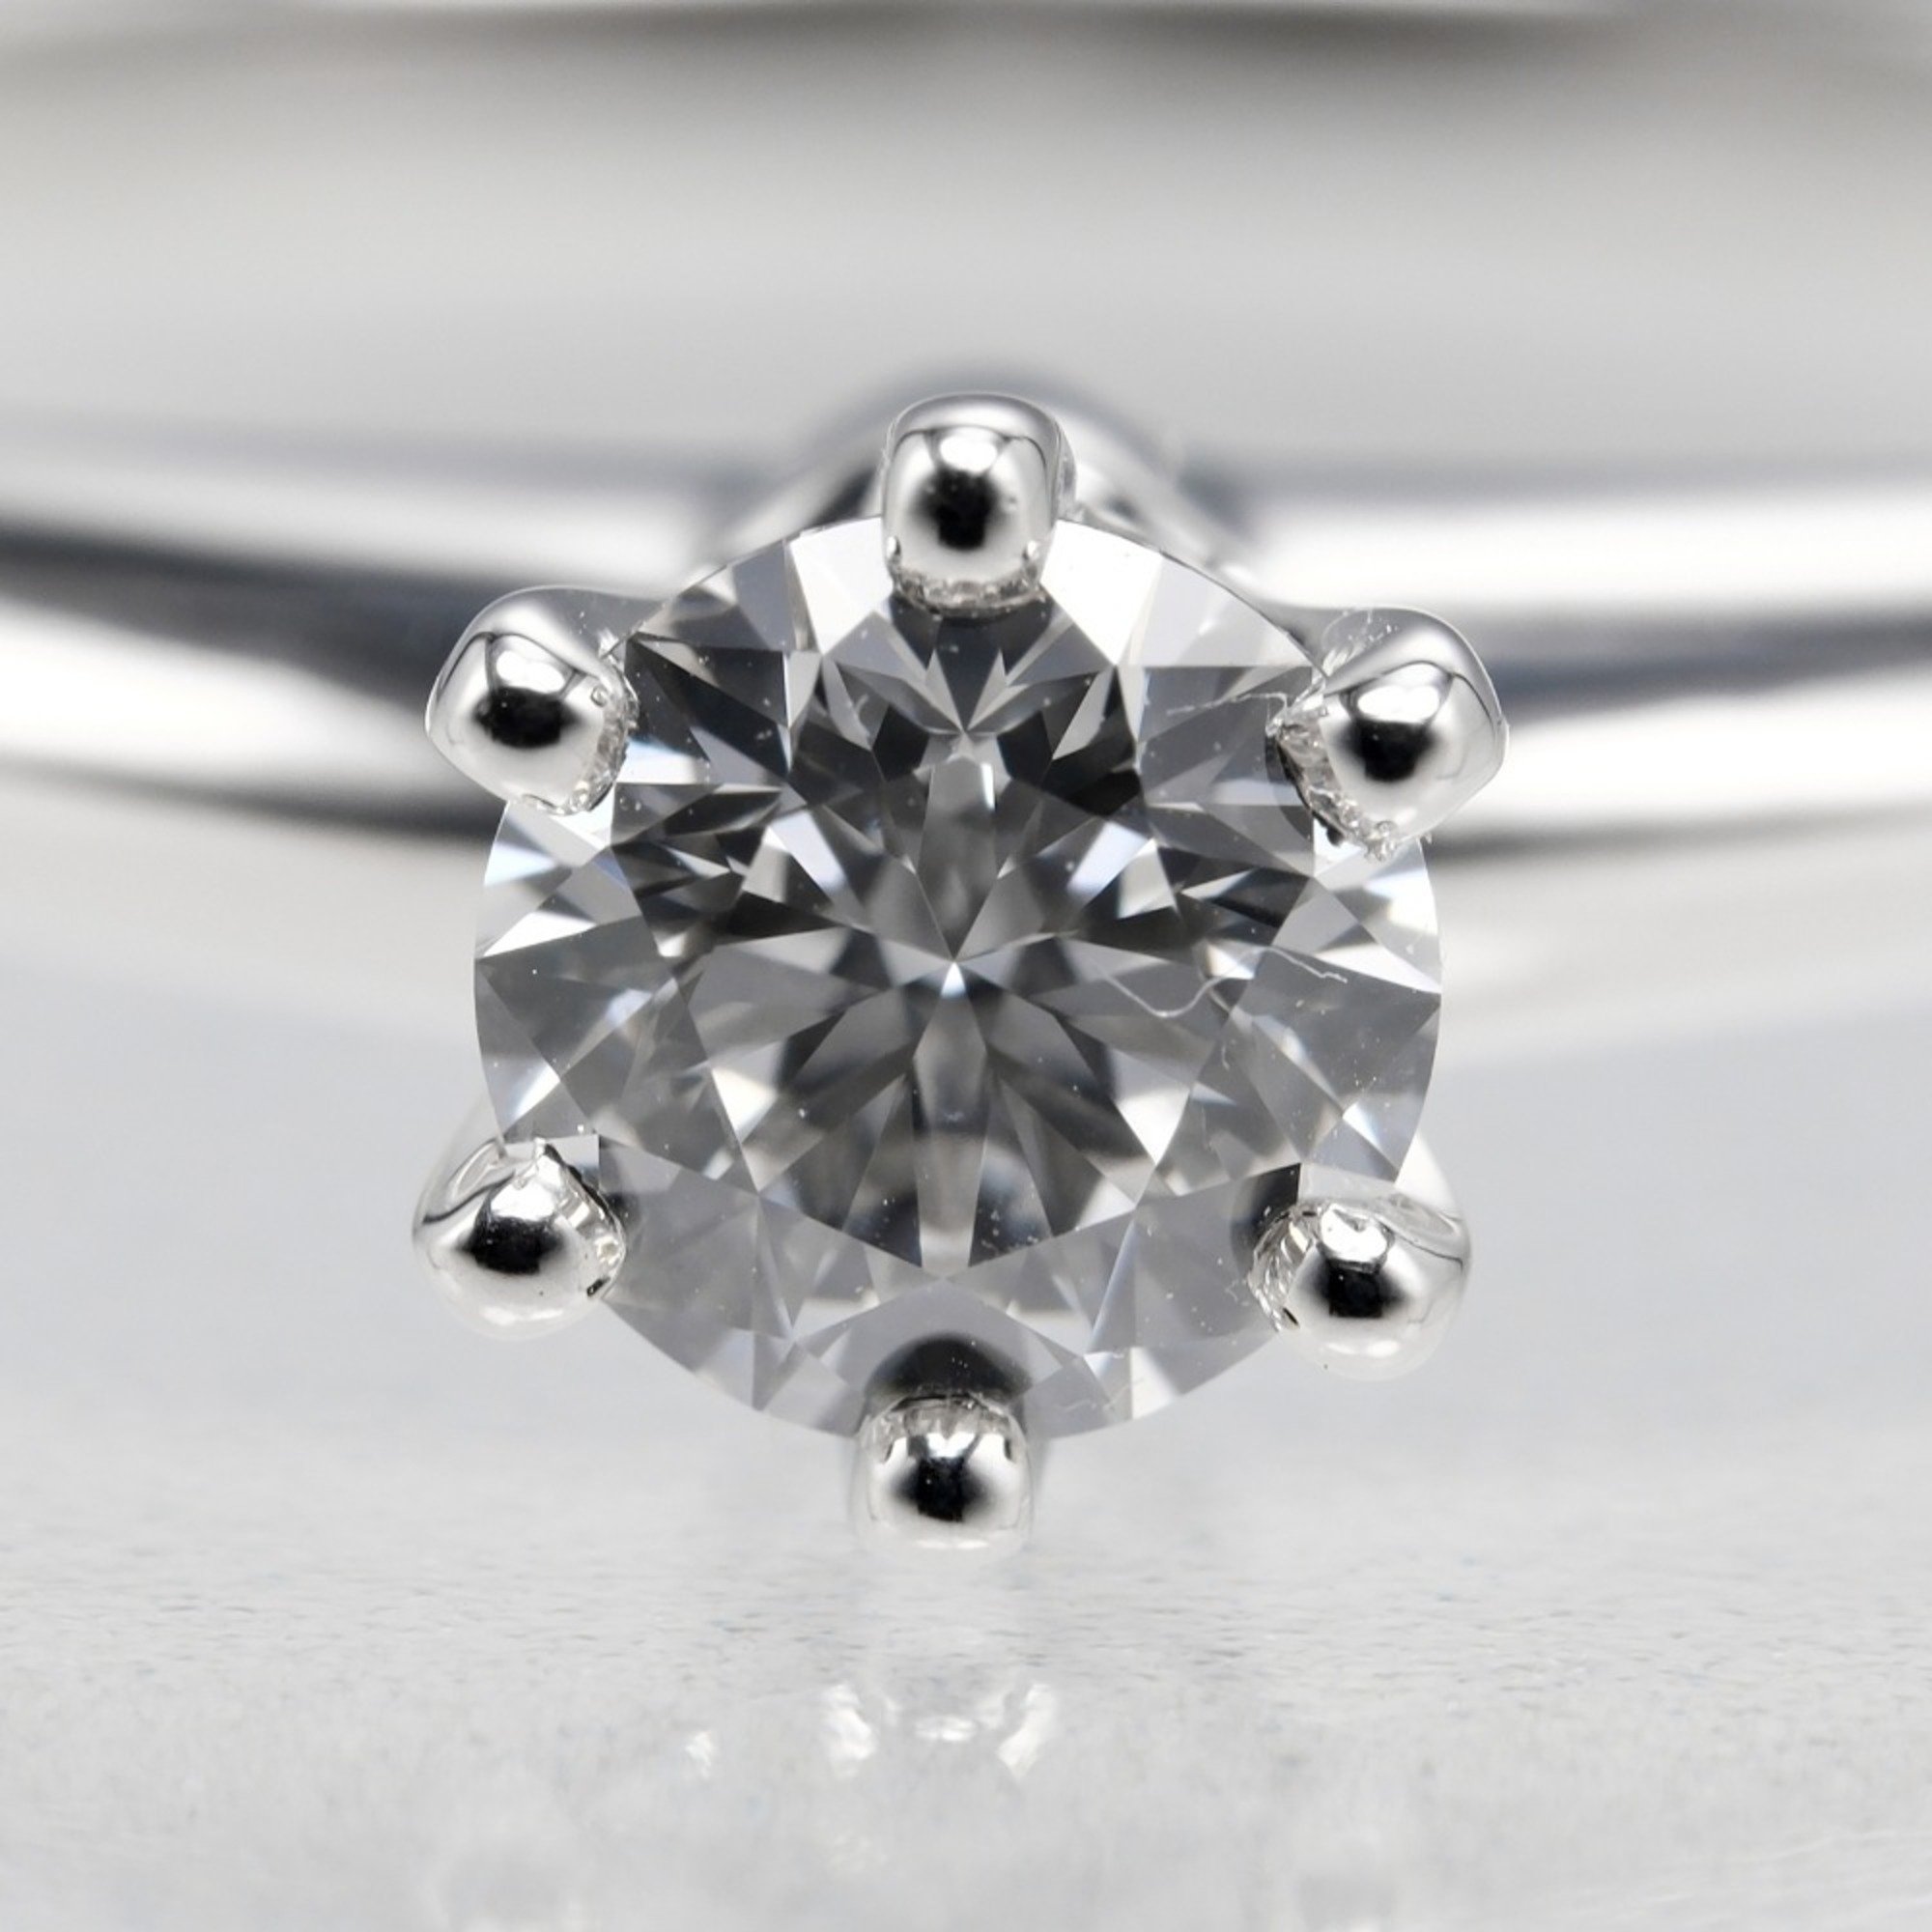 Tiffany TIFFANY&Co. Solitaire Ring 0.29ct VVS2 E 3EX Pt950 Platinum Diamond Approx. 4.17g I112223098